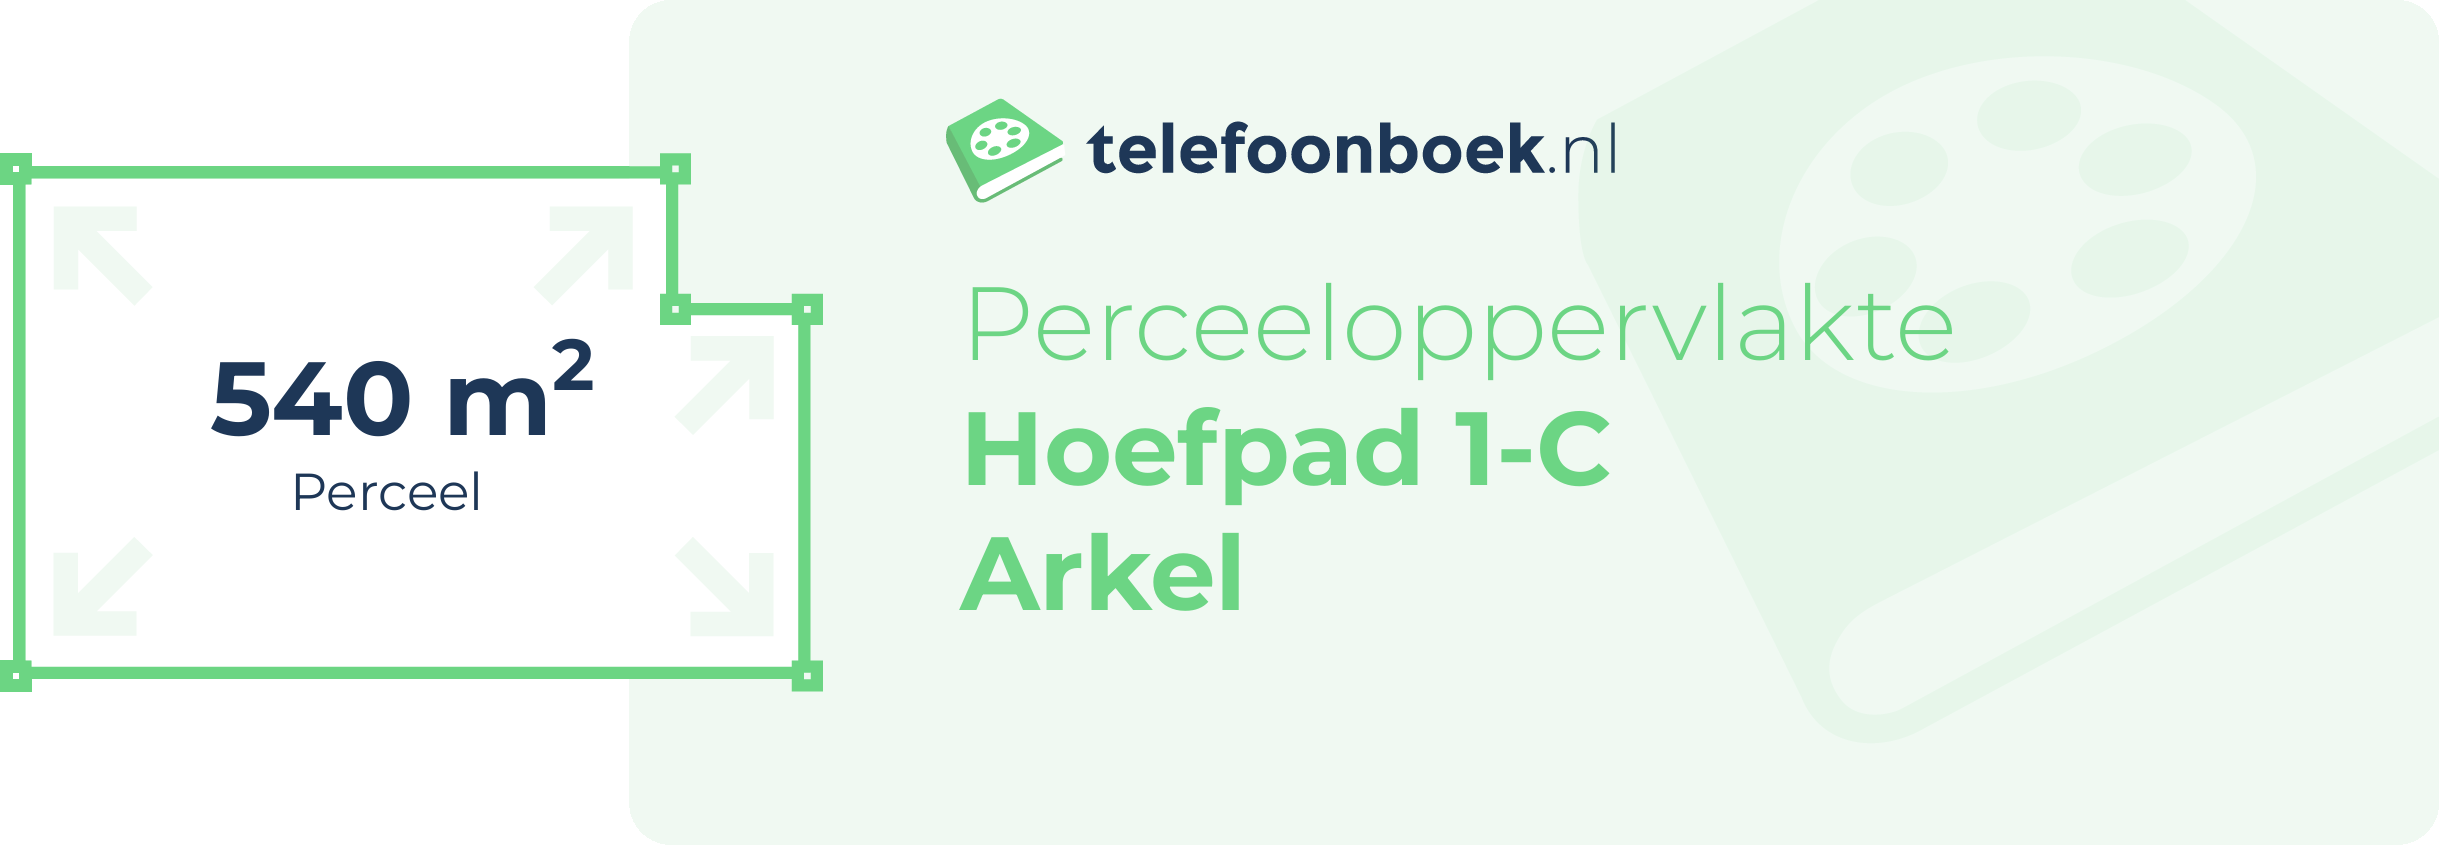 Perceeloppervlakte Hoefpad 1-C Arkel